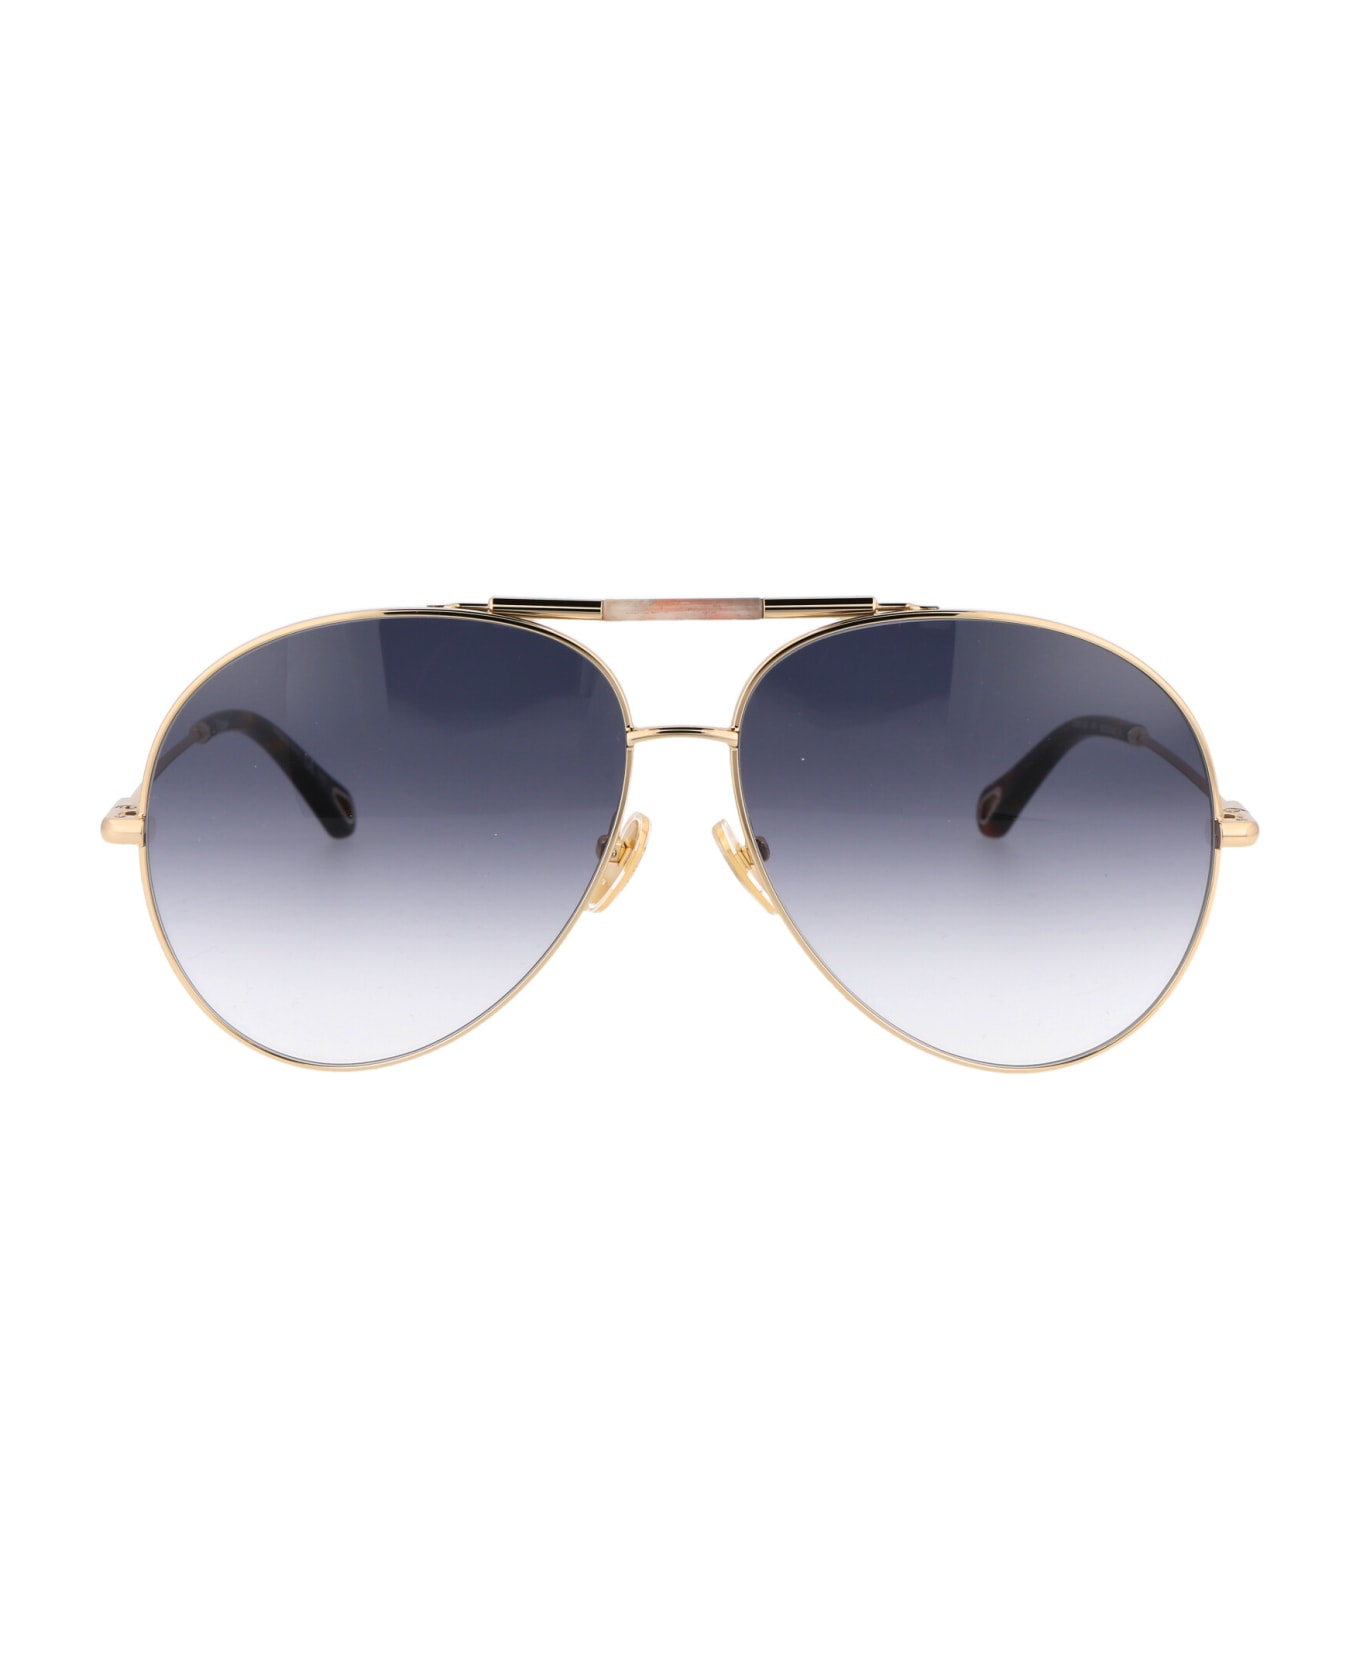 Chloé Eyewear Ch0113s Sunglasses - 001 GOLD GOLD BLUE サングラス